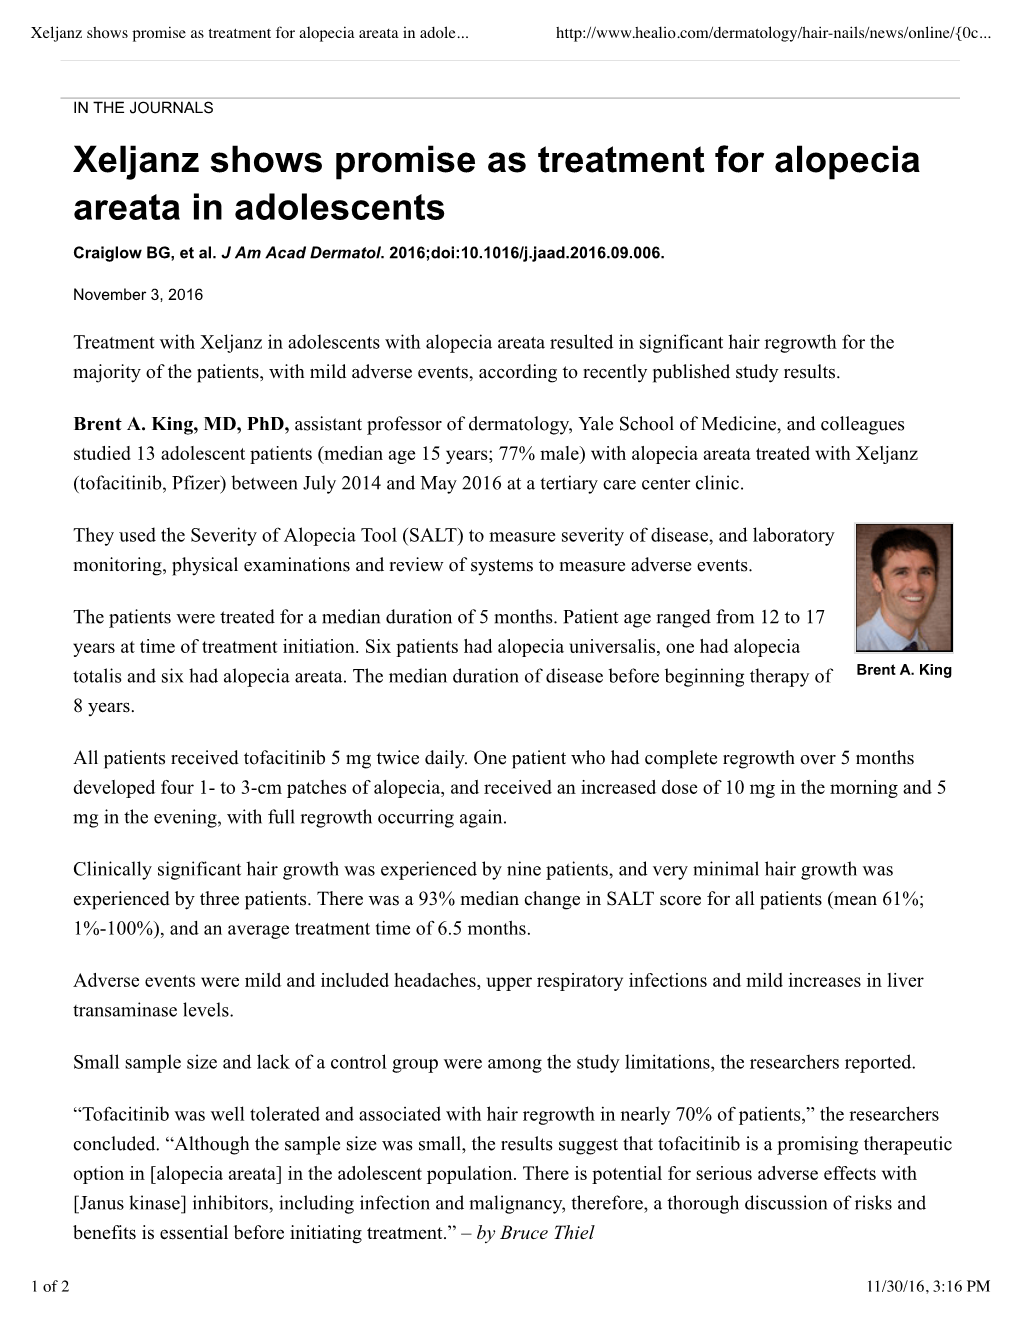 Xeljanz Shows Promise As Treatment for Alopecia Areata in Adolescents